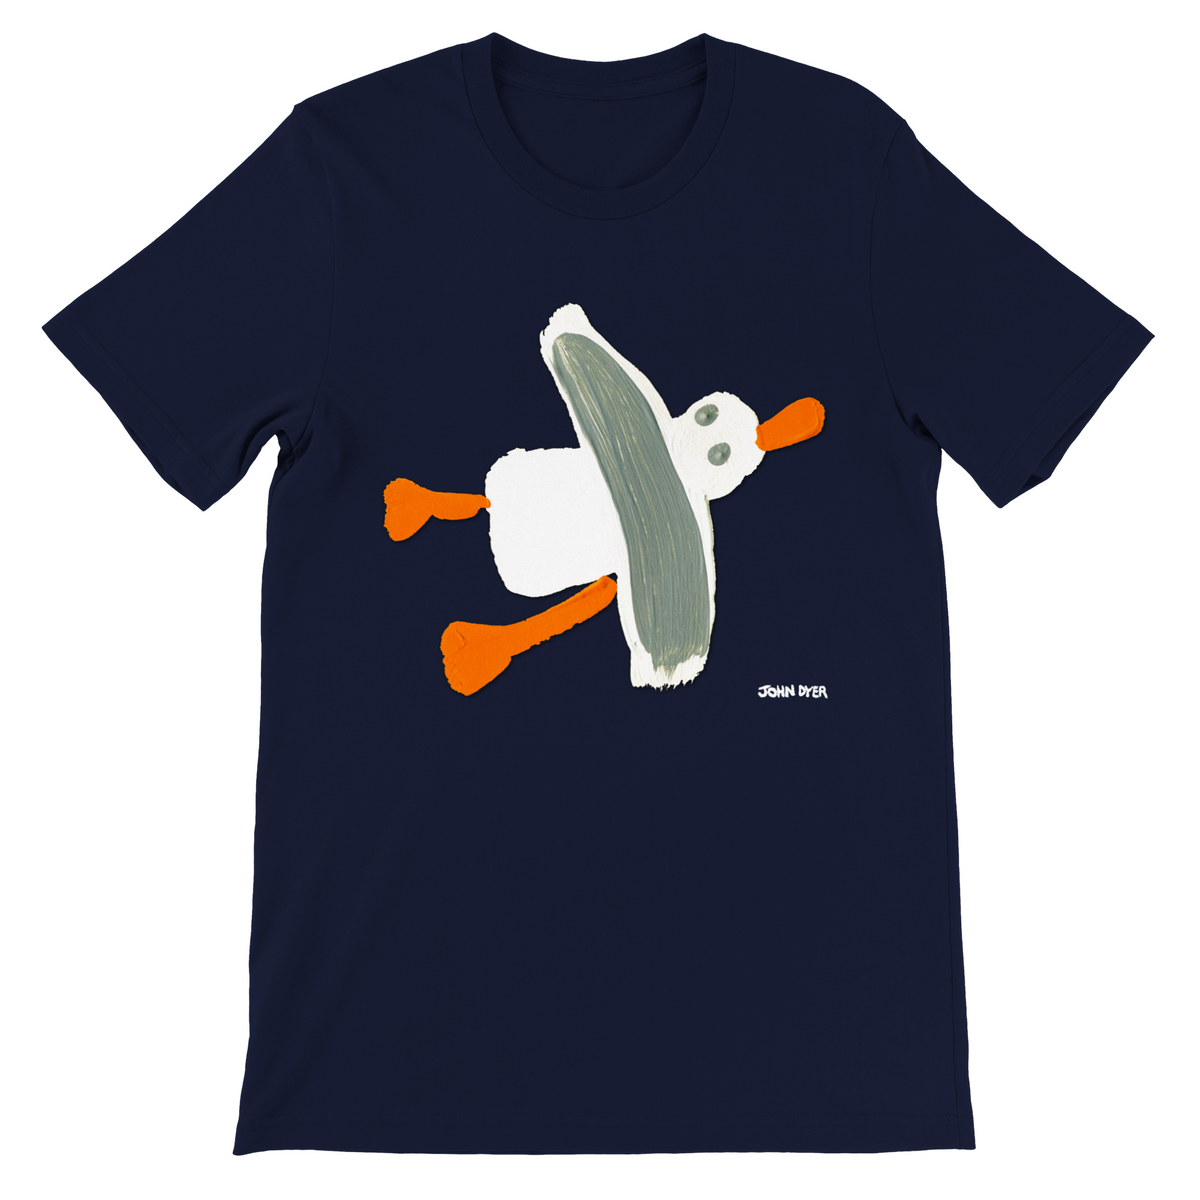 Navy Blue Cornish seagull t-shirt by artist John Dyer. Cornwall beach wear..